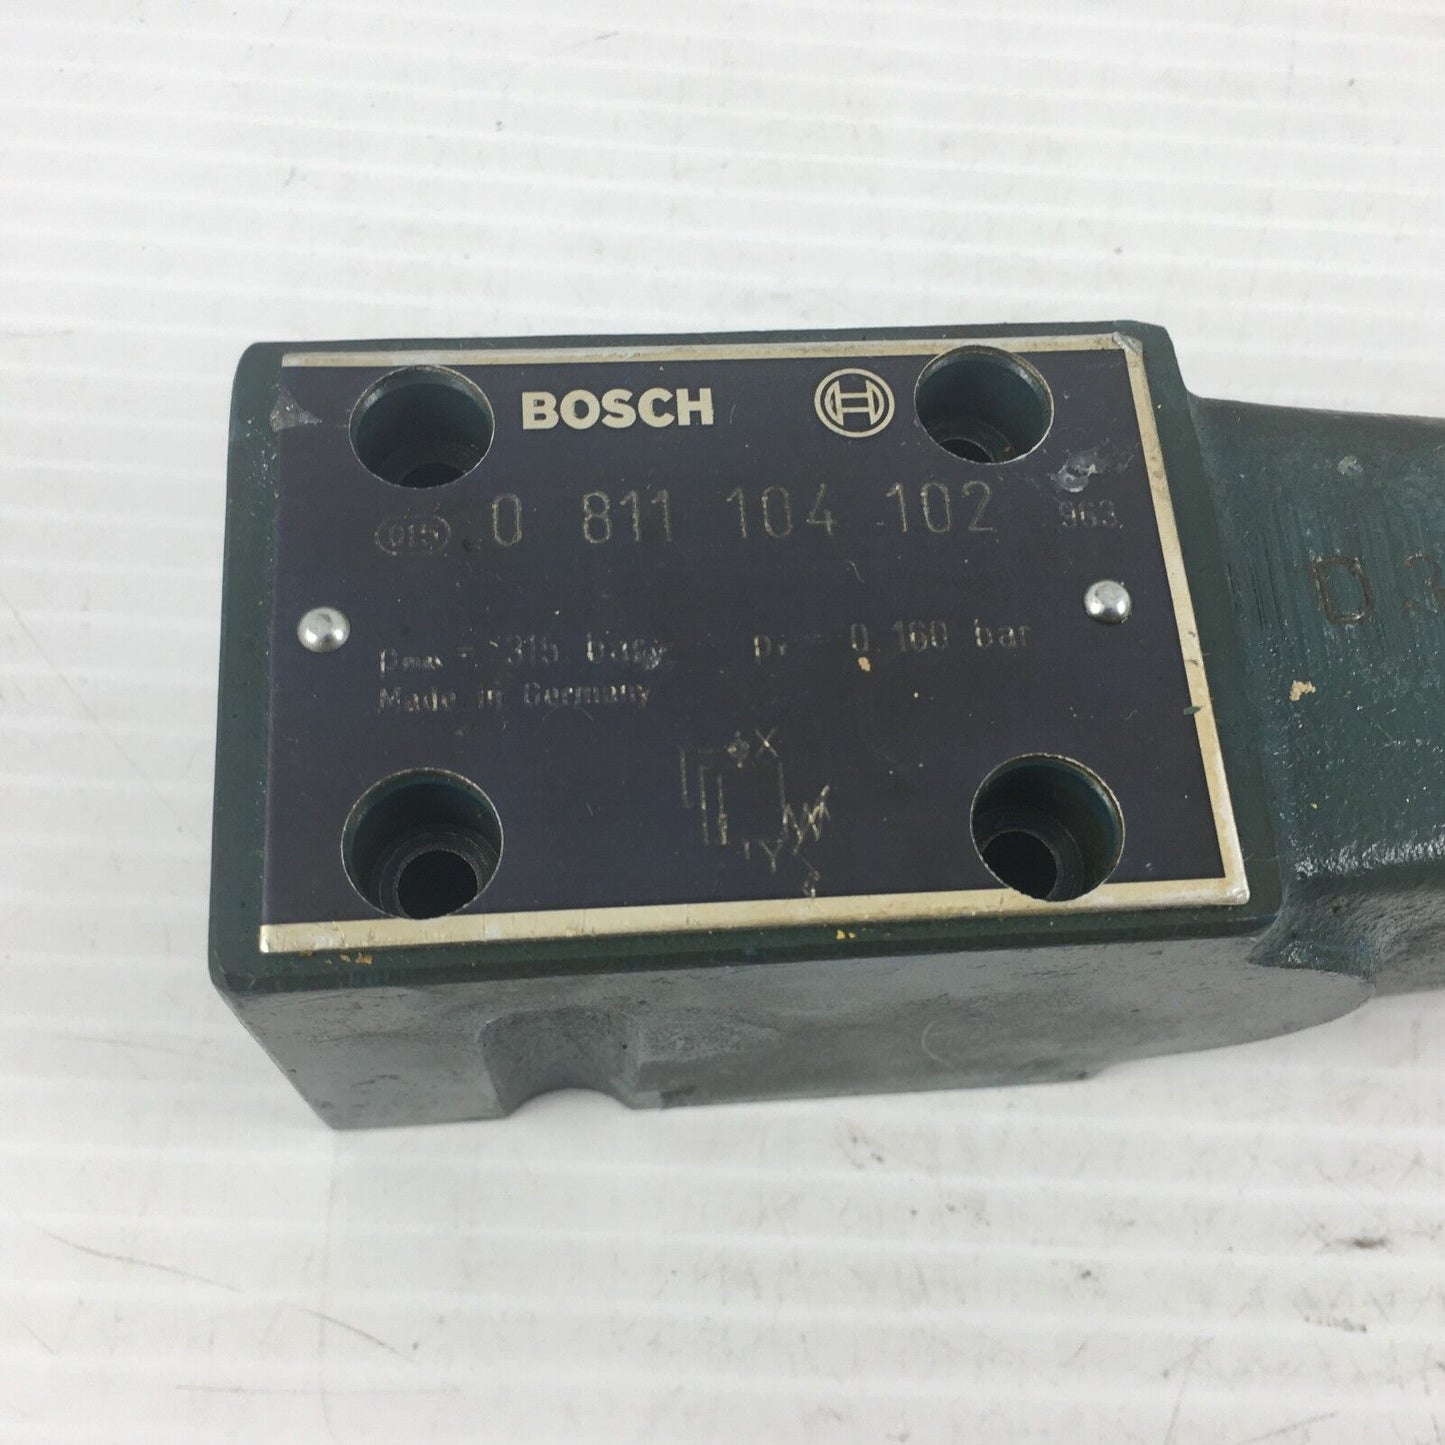 Bosch Valve 0 811 104 102